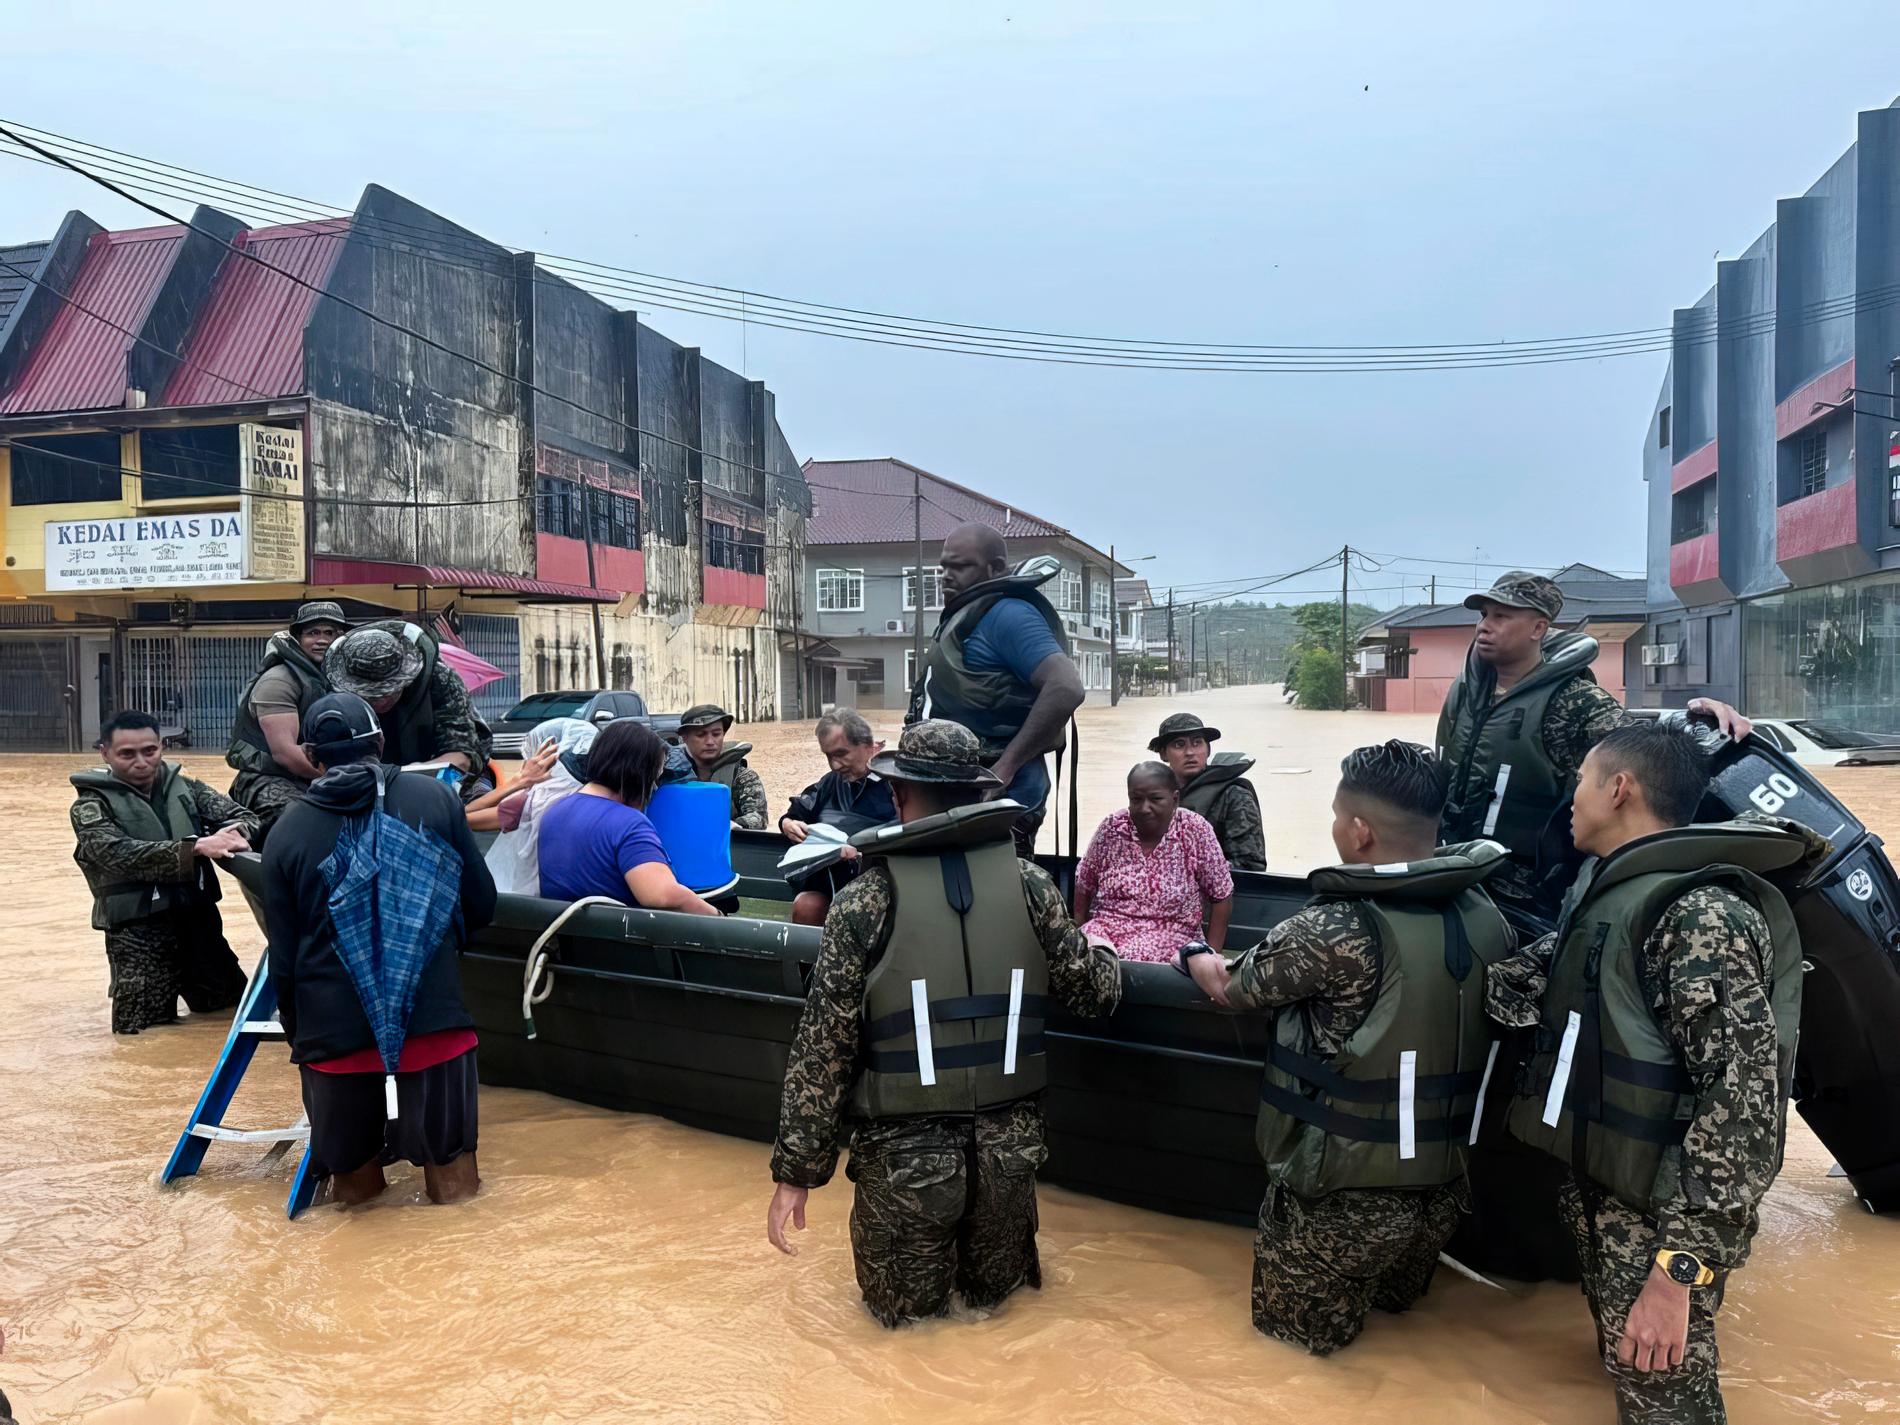 Tiotusentals evakueras efter skyfall i Malaysia